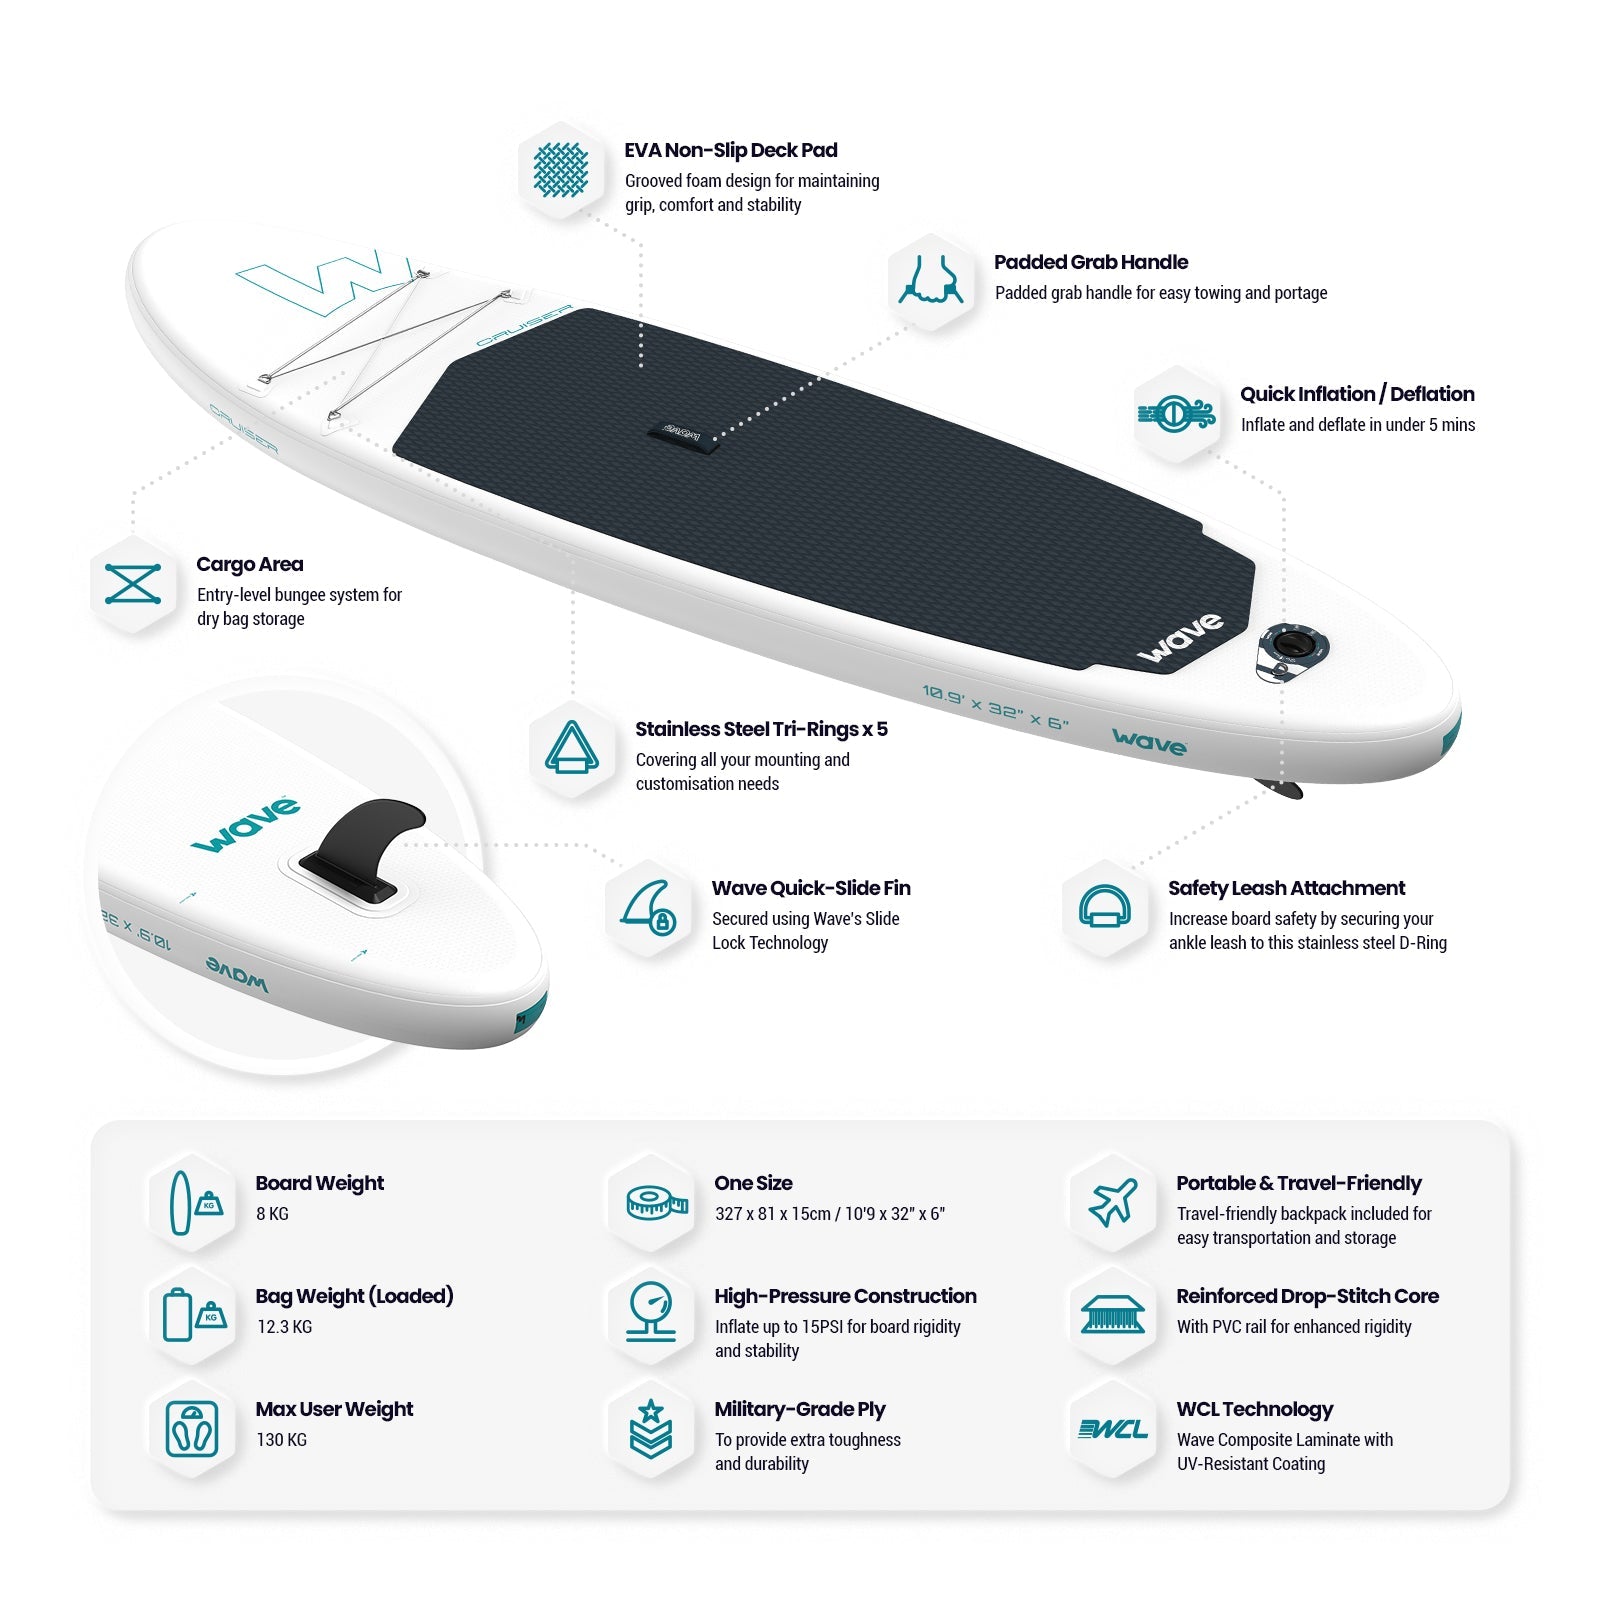 Cruiser 2.0 SUP | Inflatable Paddleboard | 10'9ft | White - Wave Sups USA